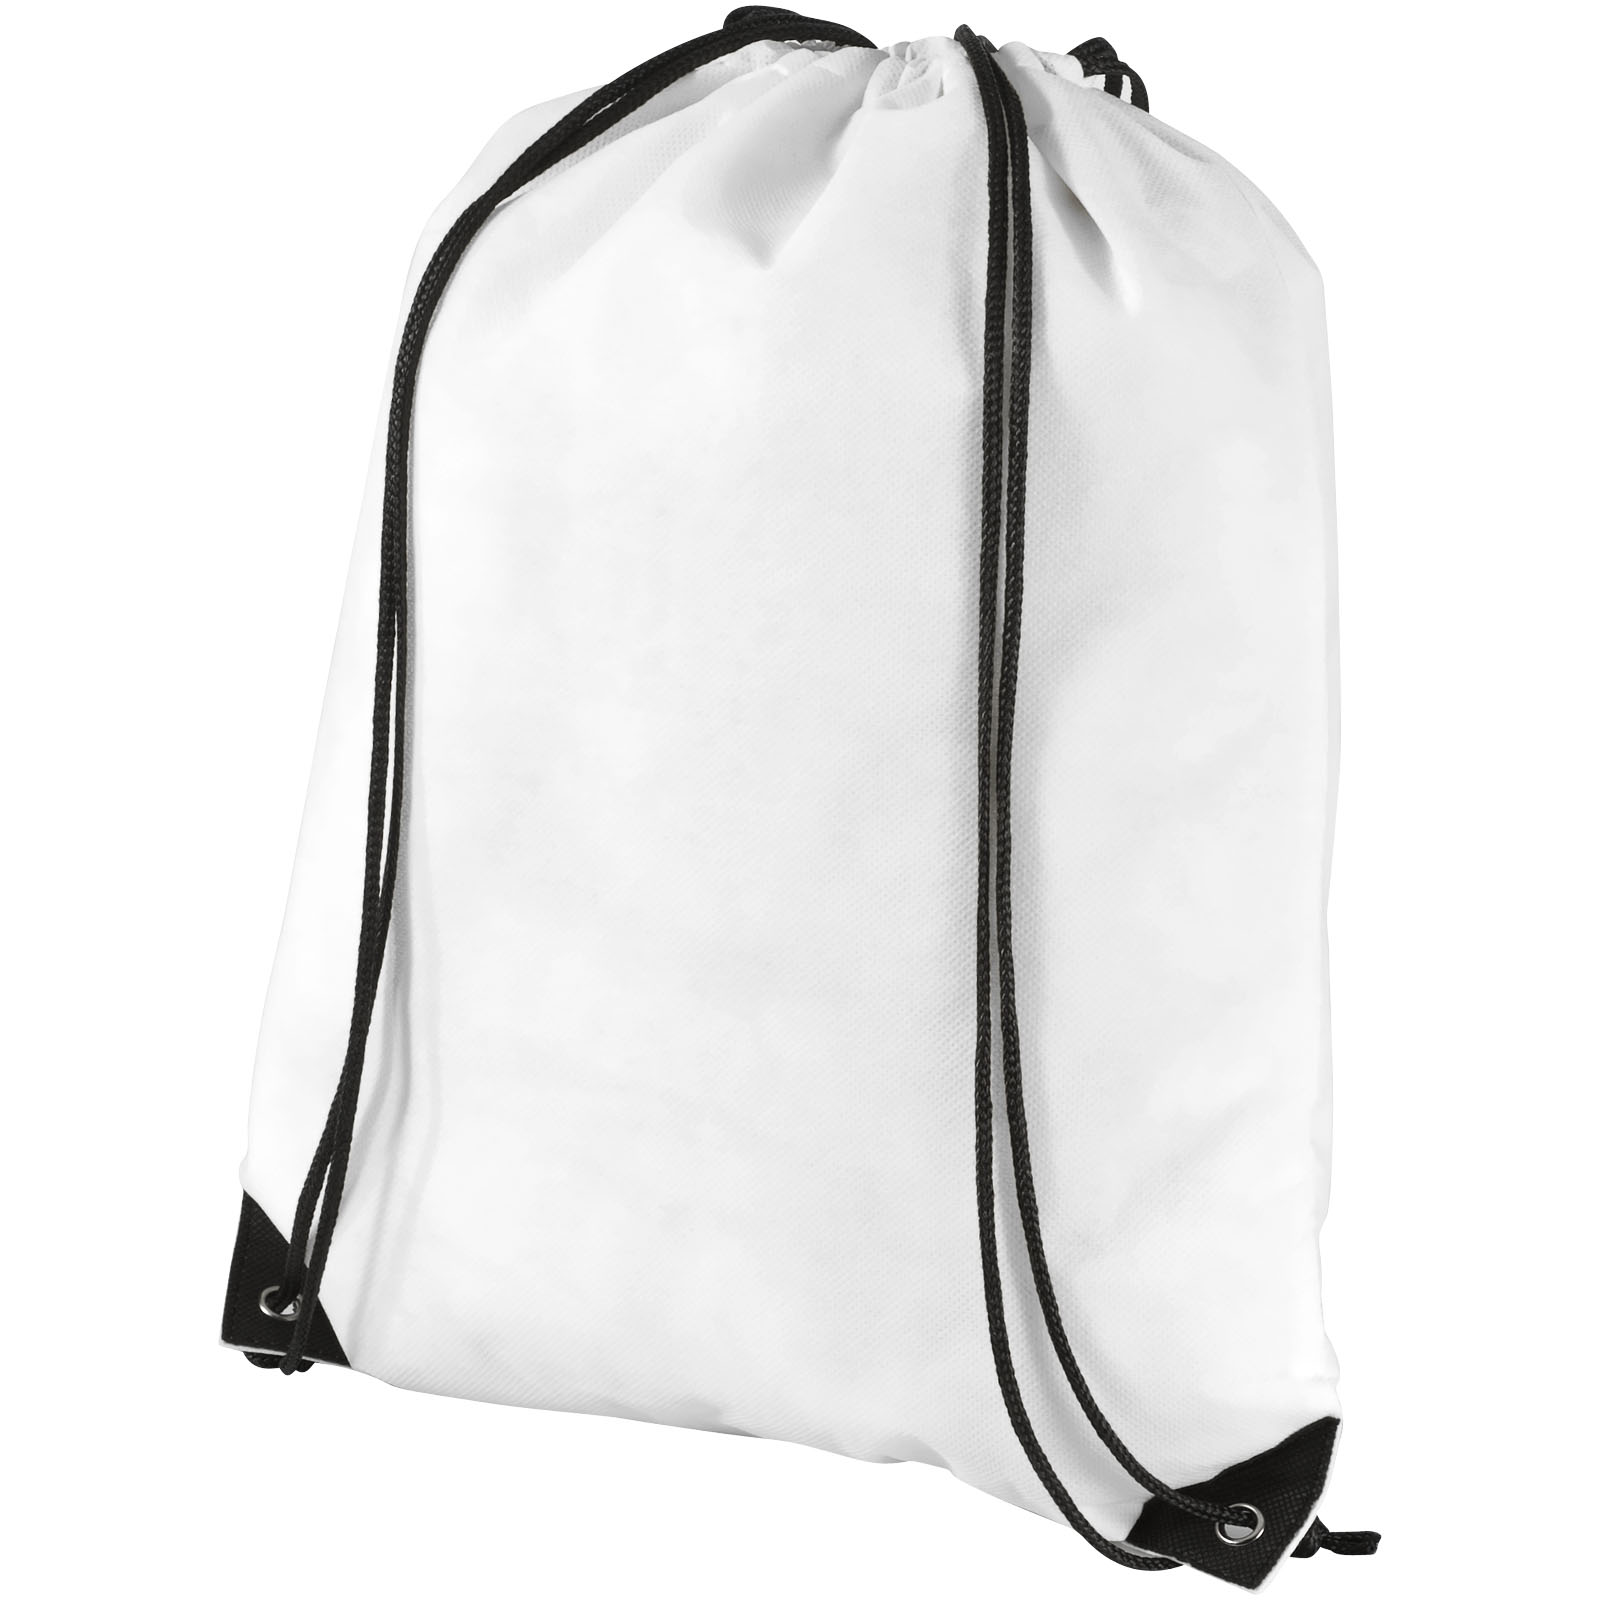 Drawstring Bags - Evergreen non-woven drawstring bag 5L